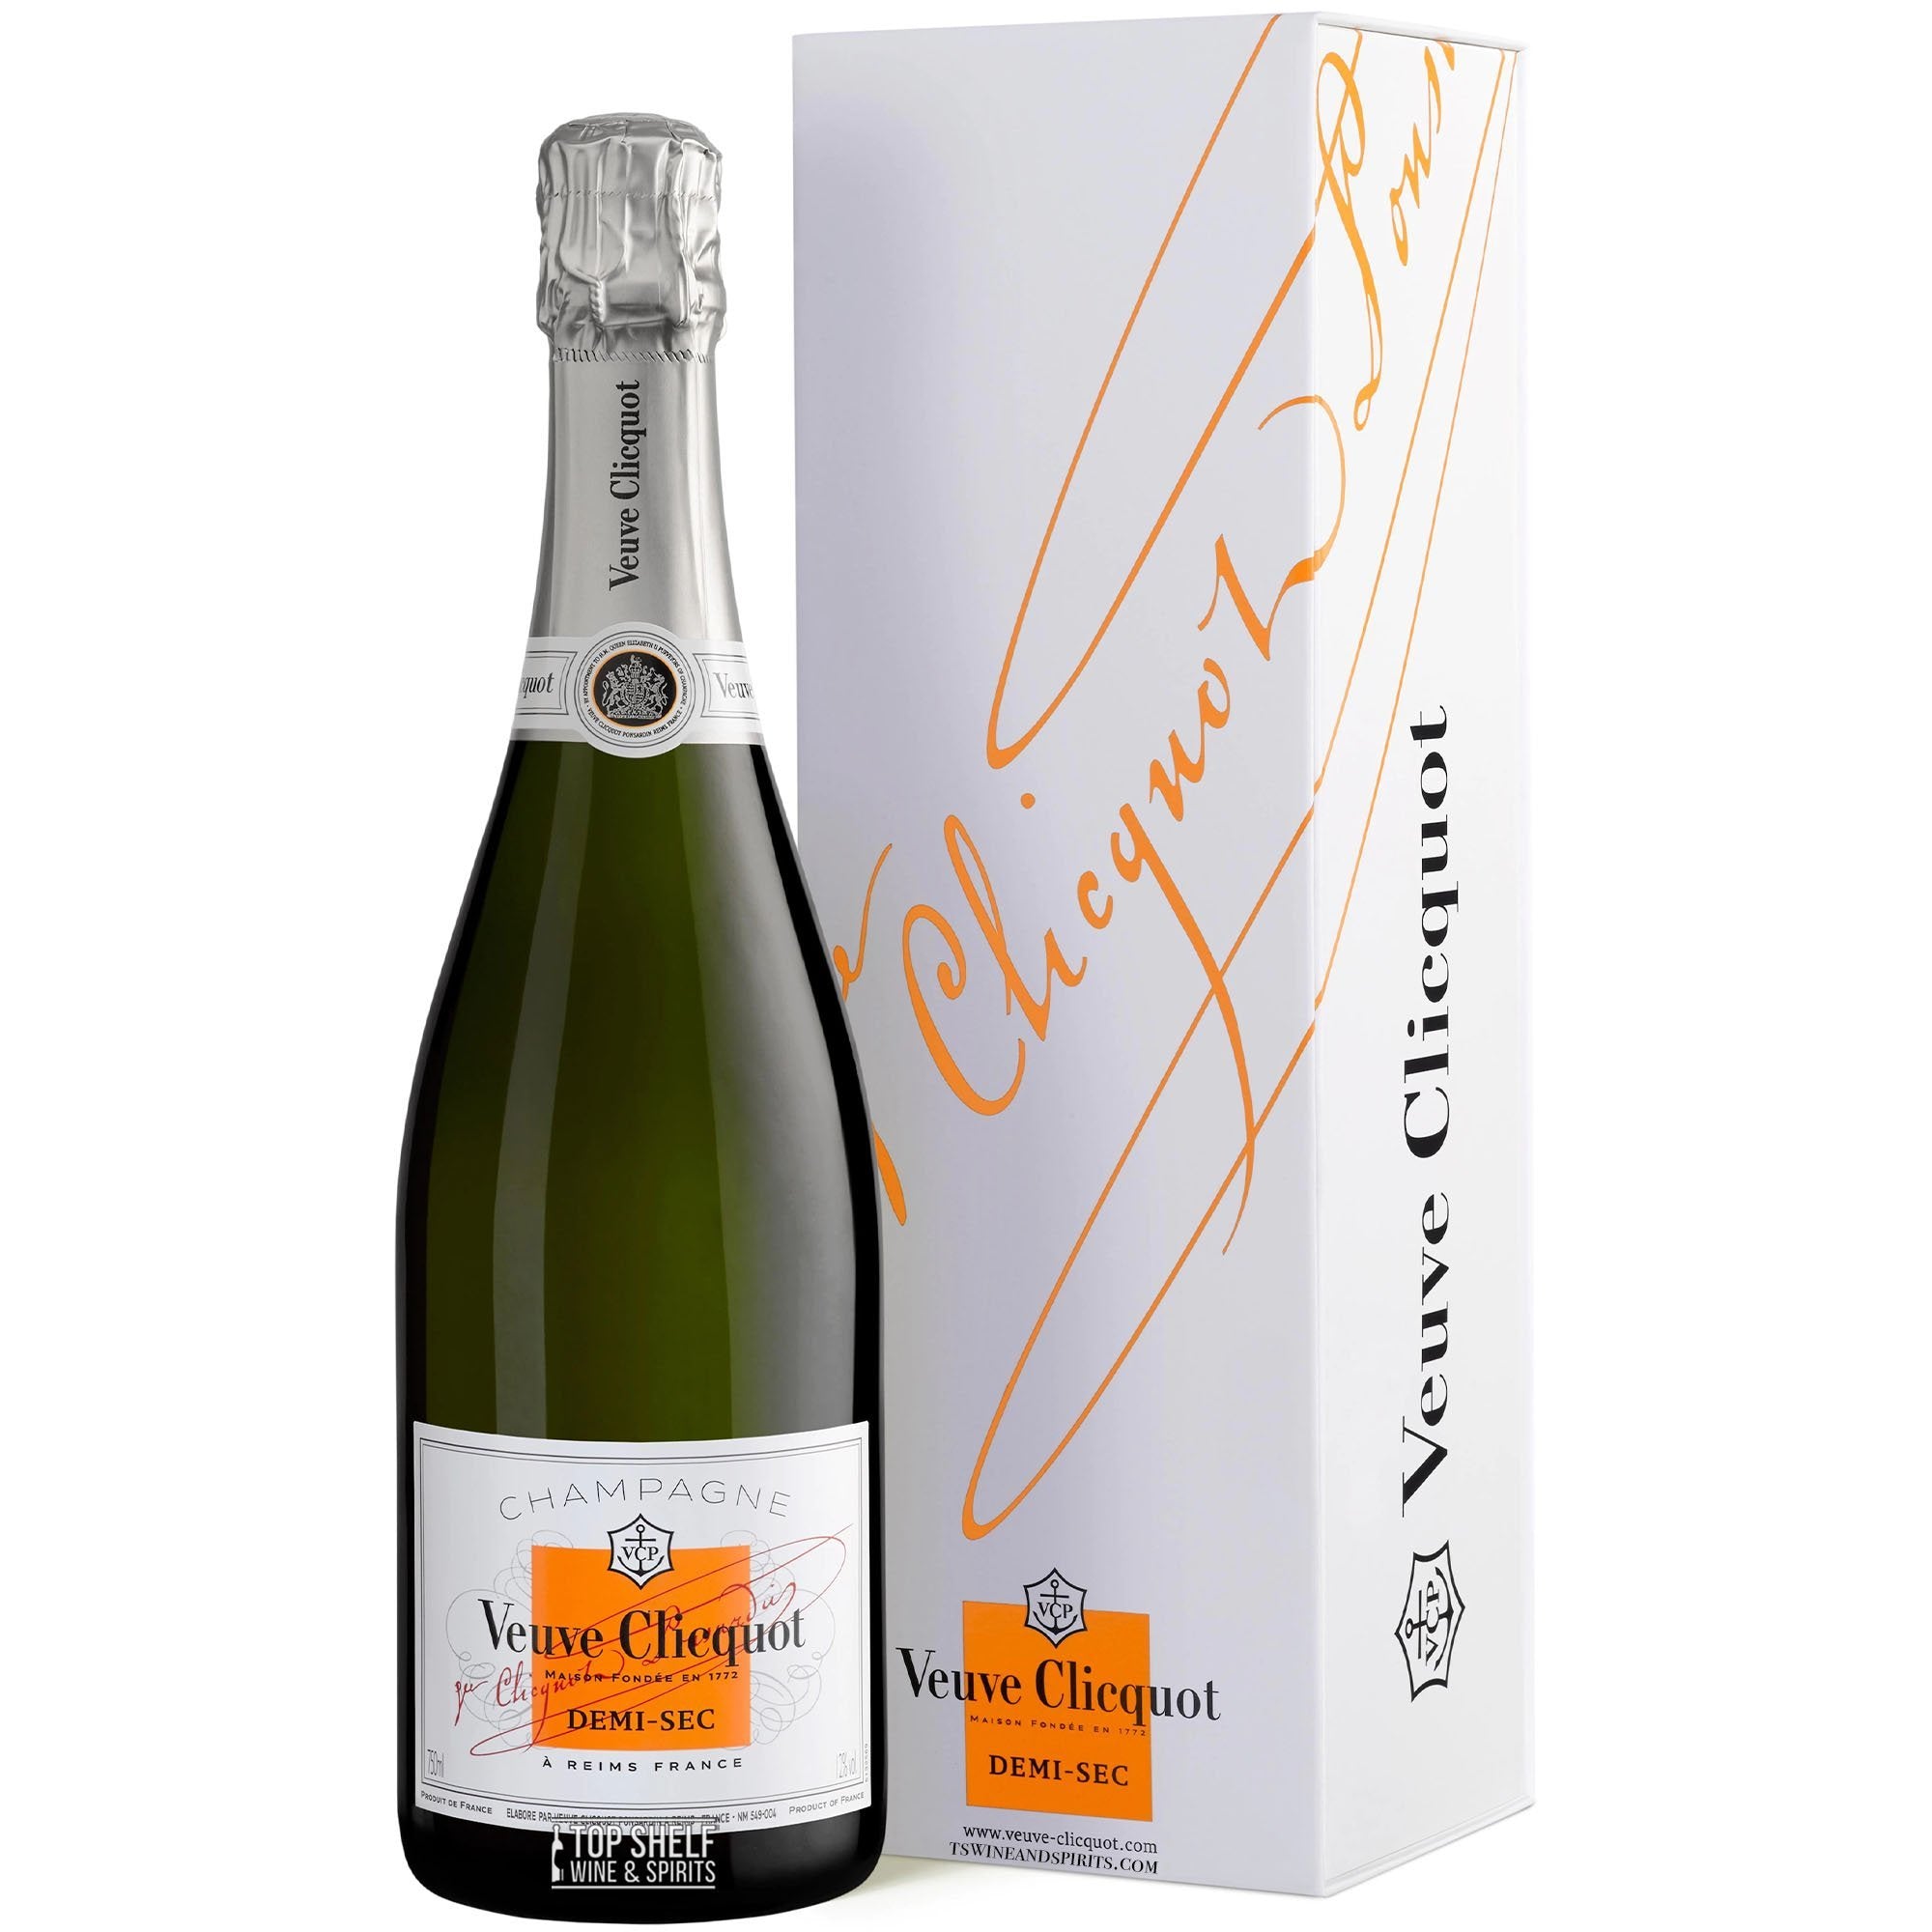 Veuve Clicquot Demi-Sec Champagne (the sweet treat)